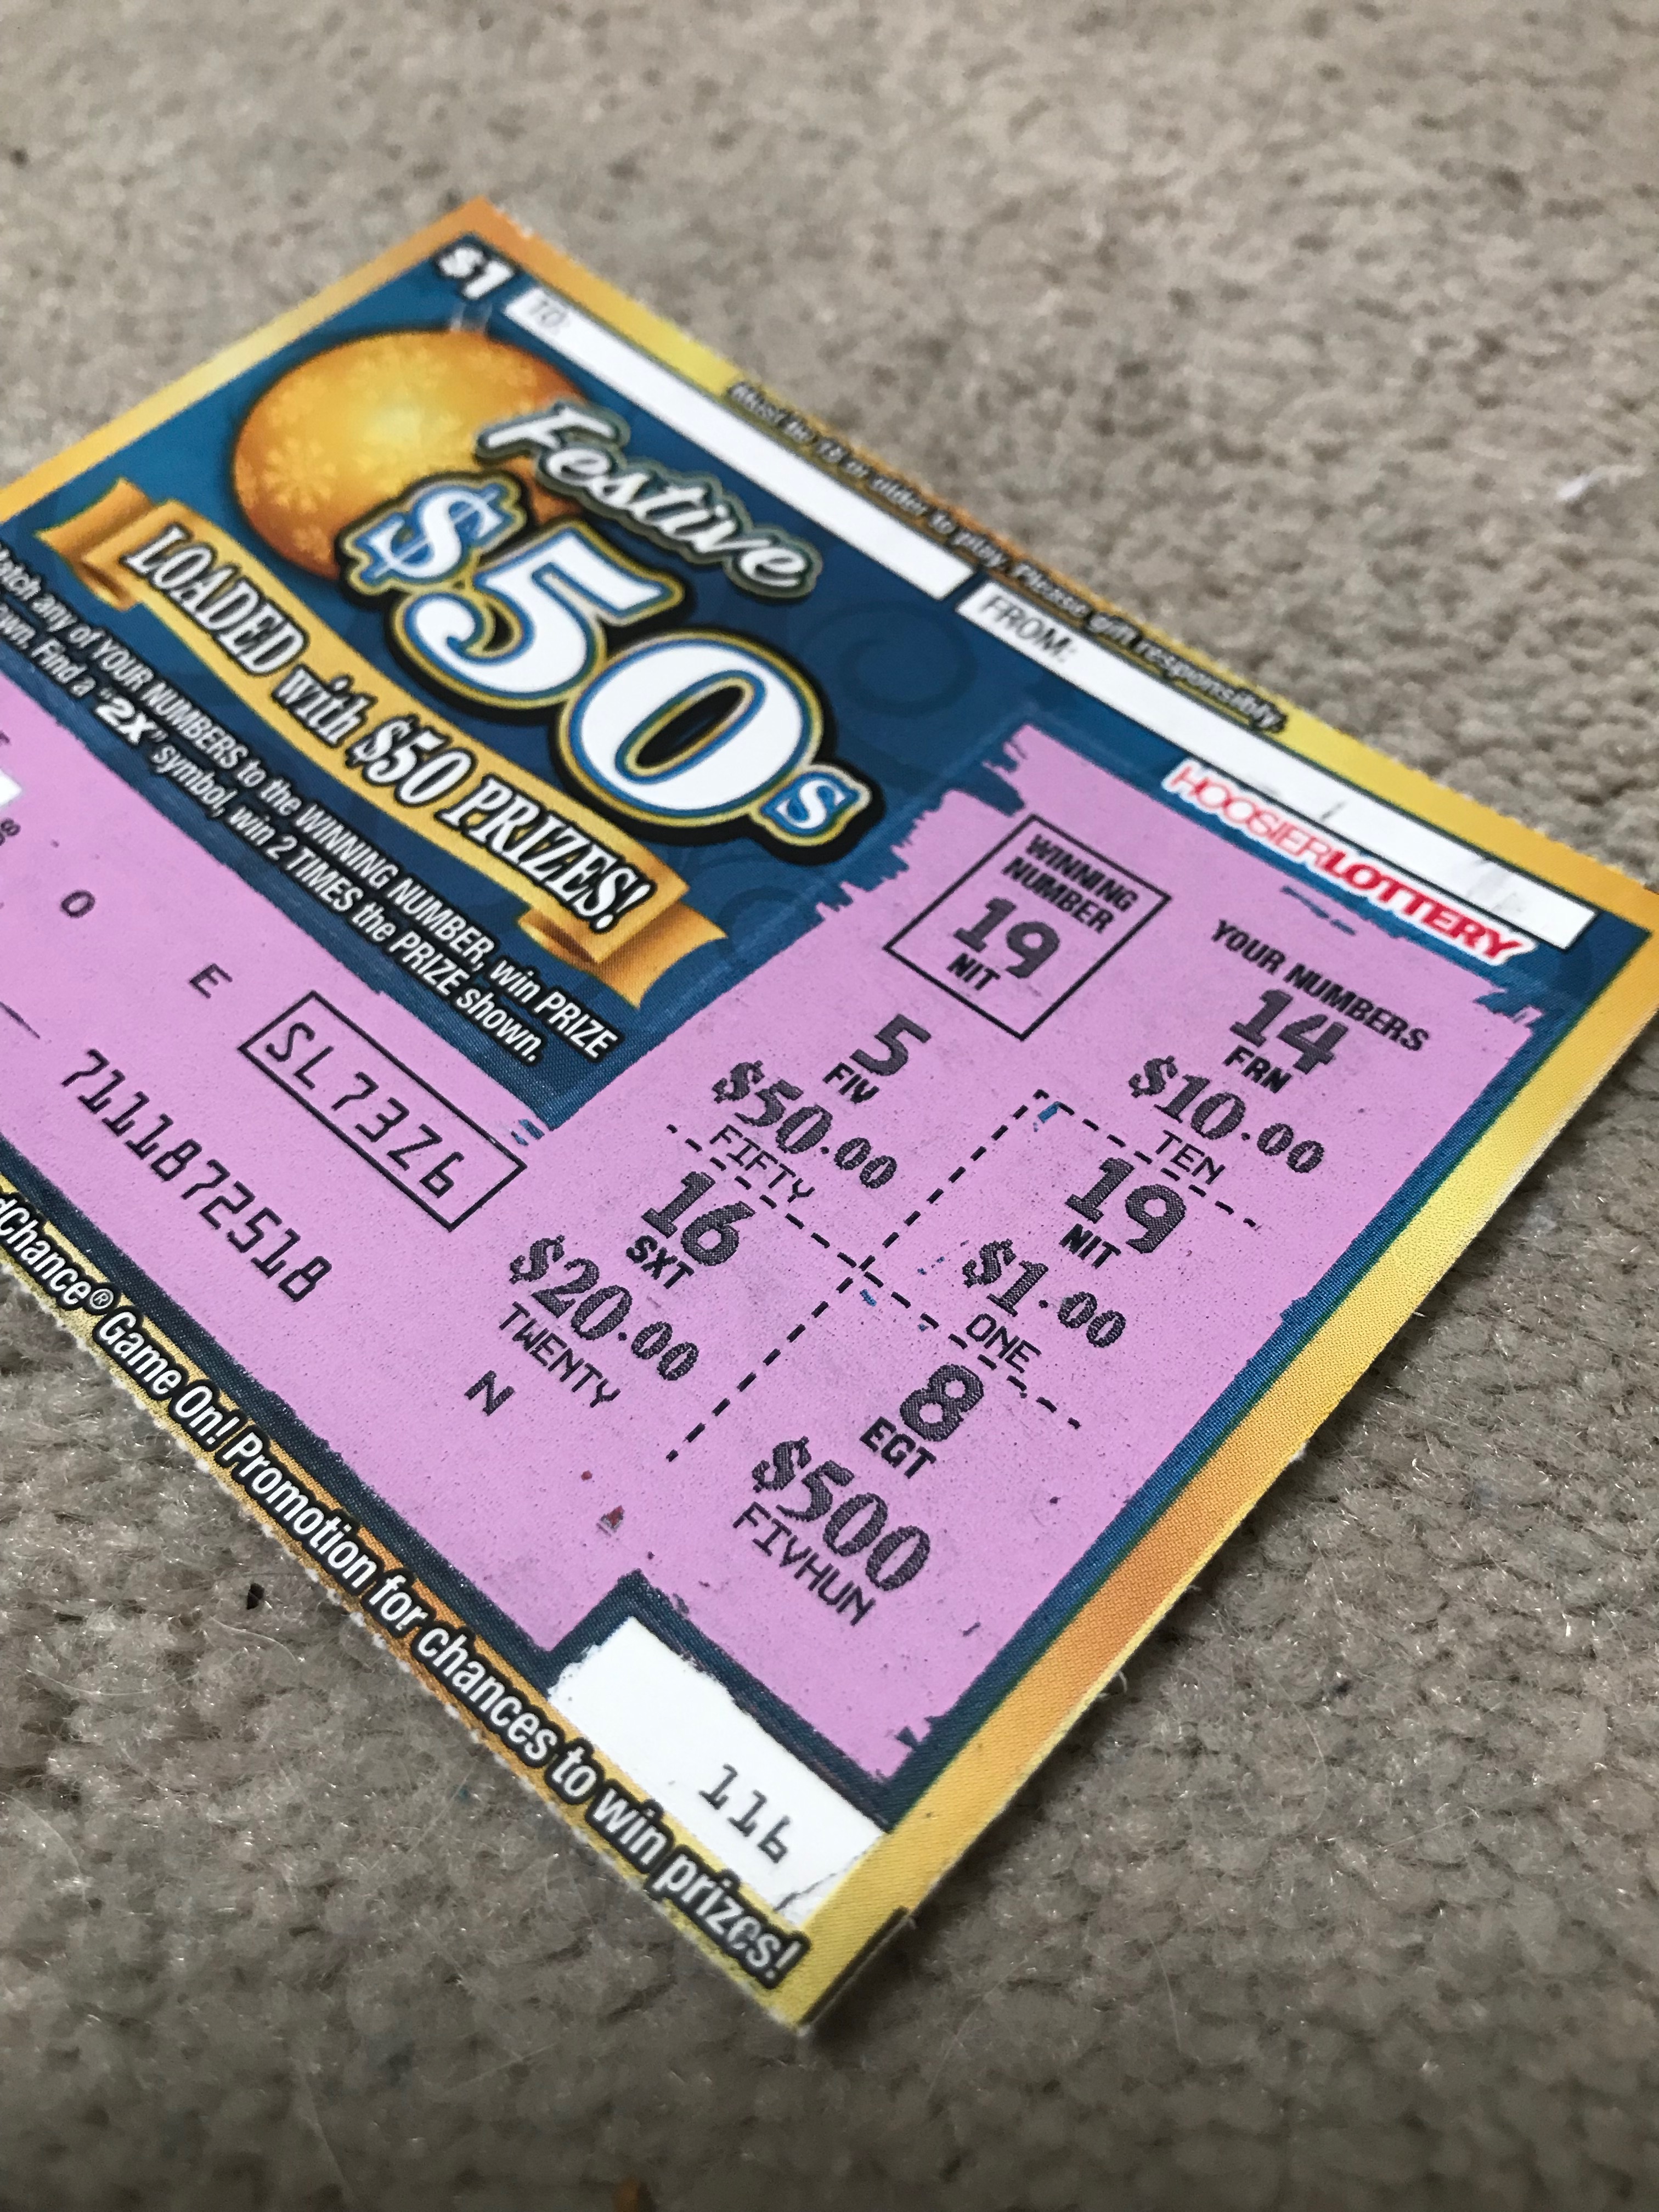 Scratch off Lottery ticket